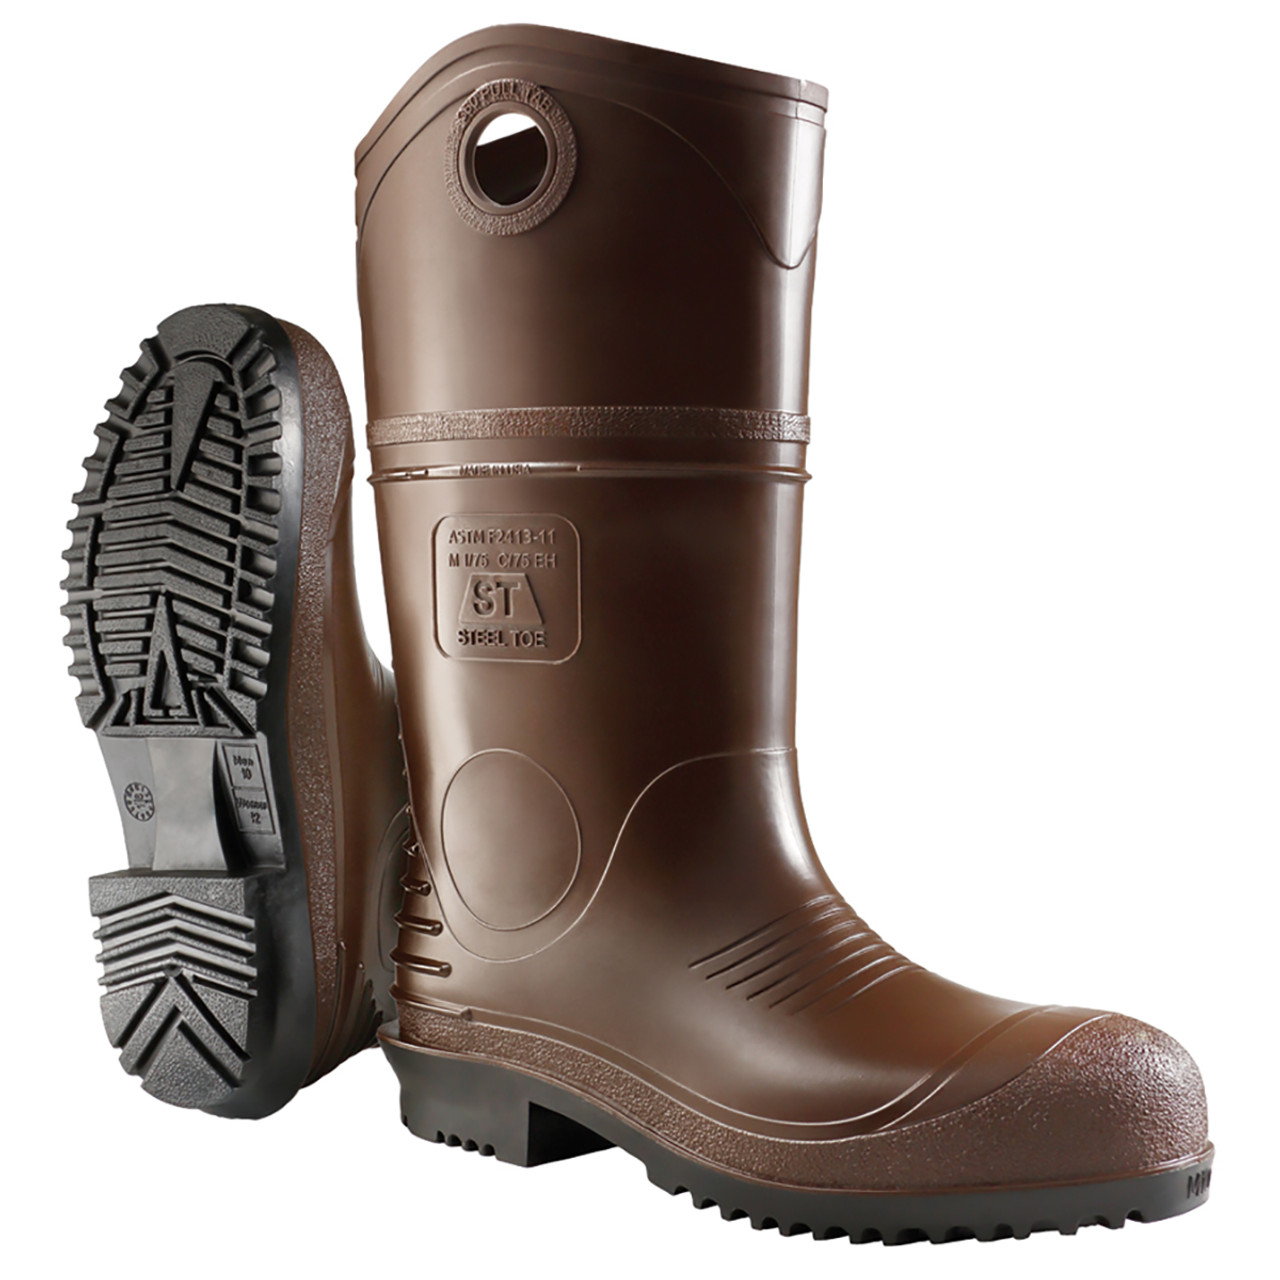 Dunlop steel toe rubber boots